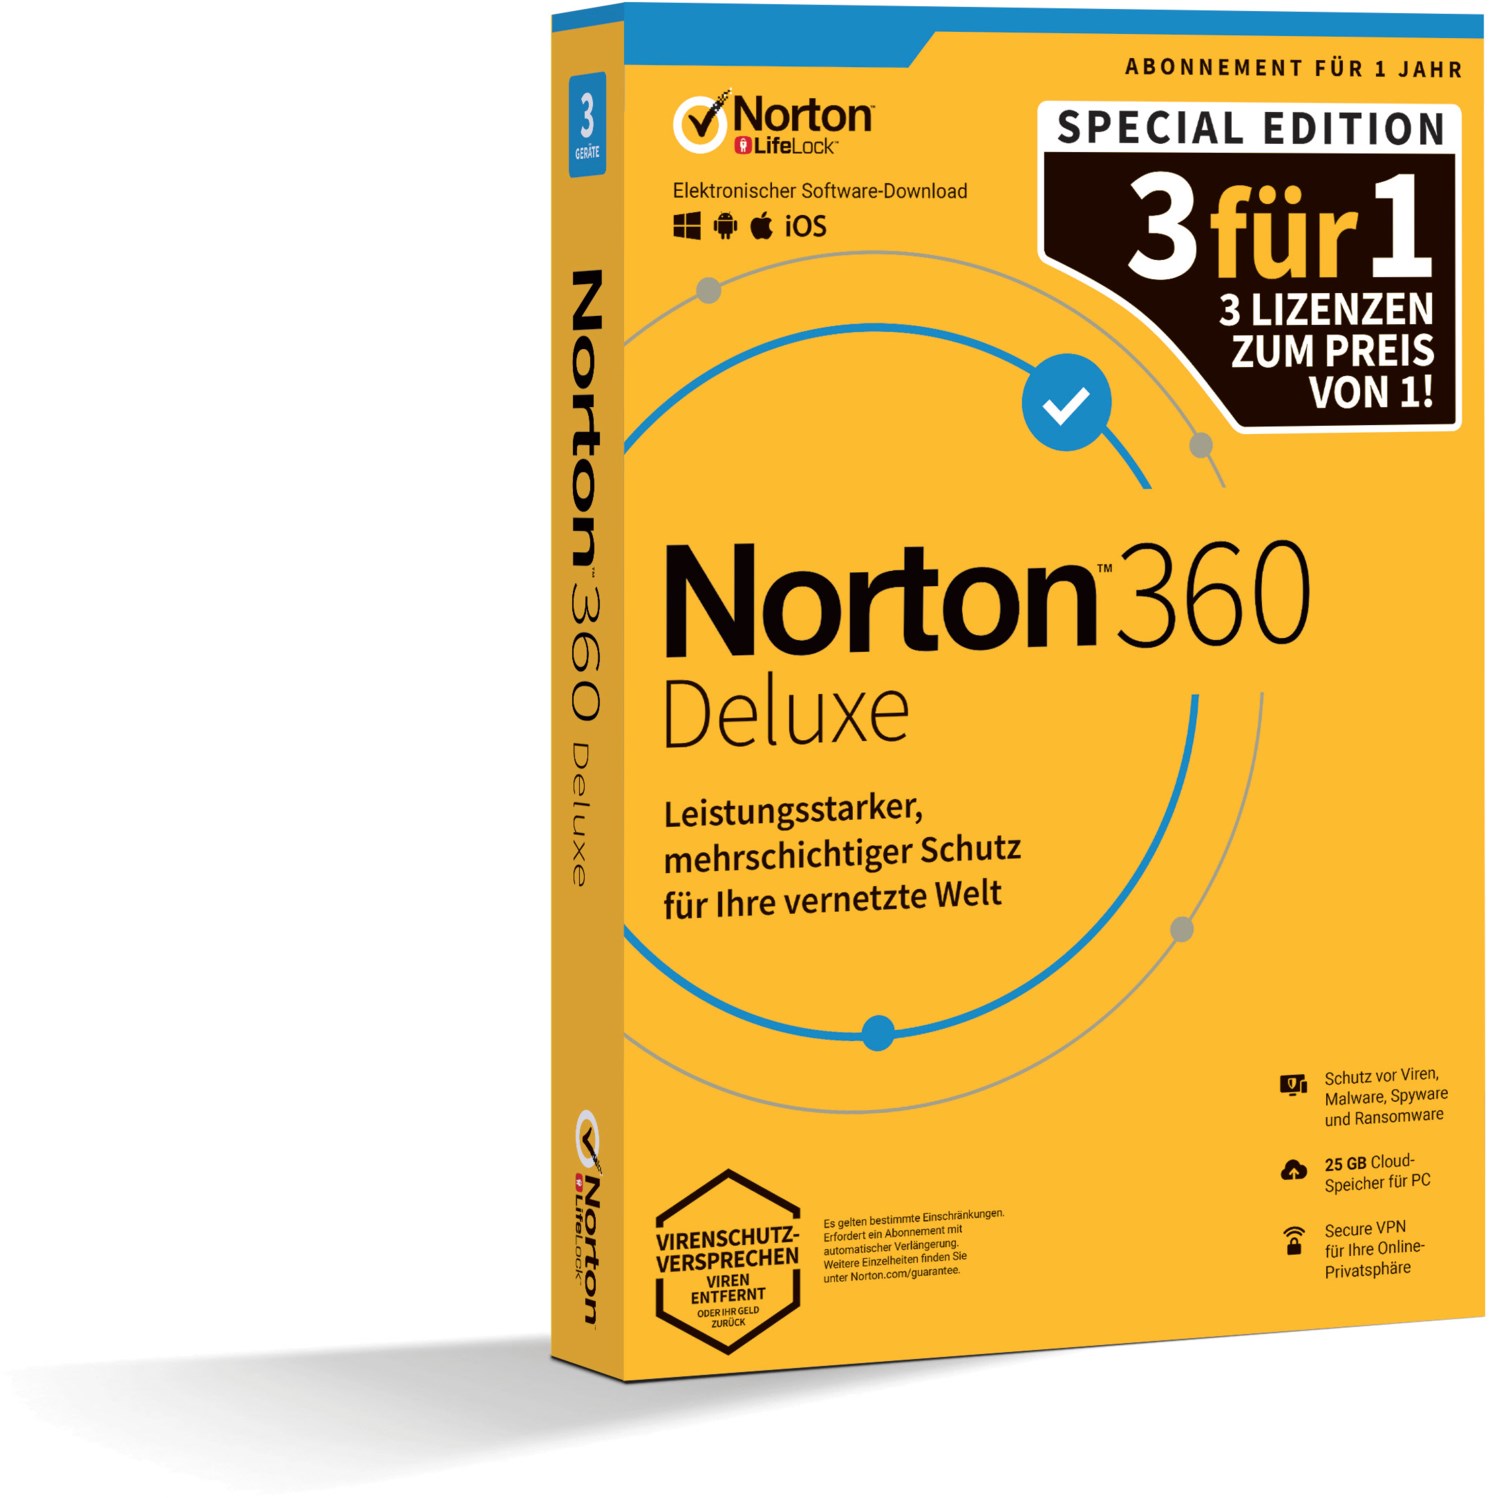 360 Deluxe Special Edition Software für 3 Geräte von Norton